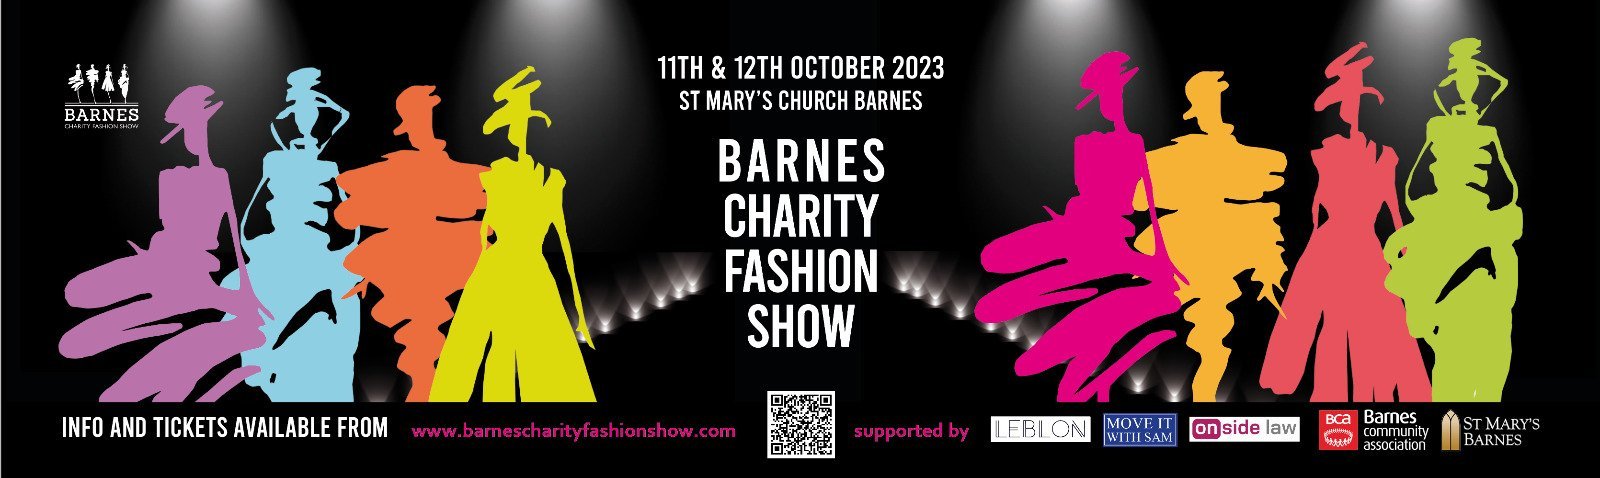 Barnes Fashion Show 2023.jpg